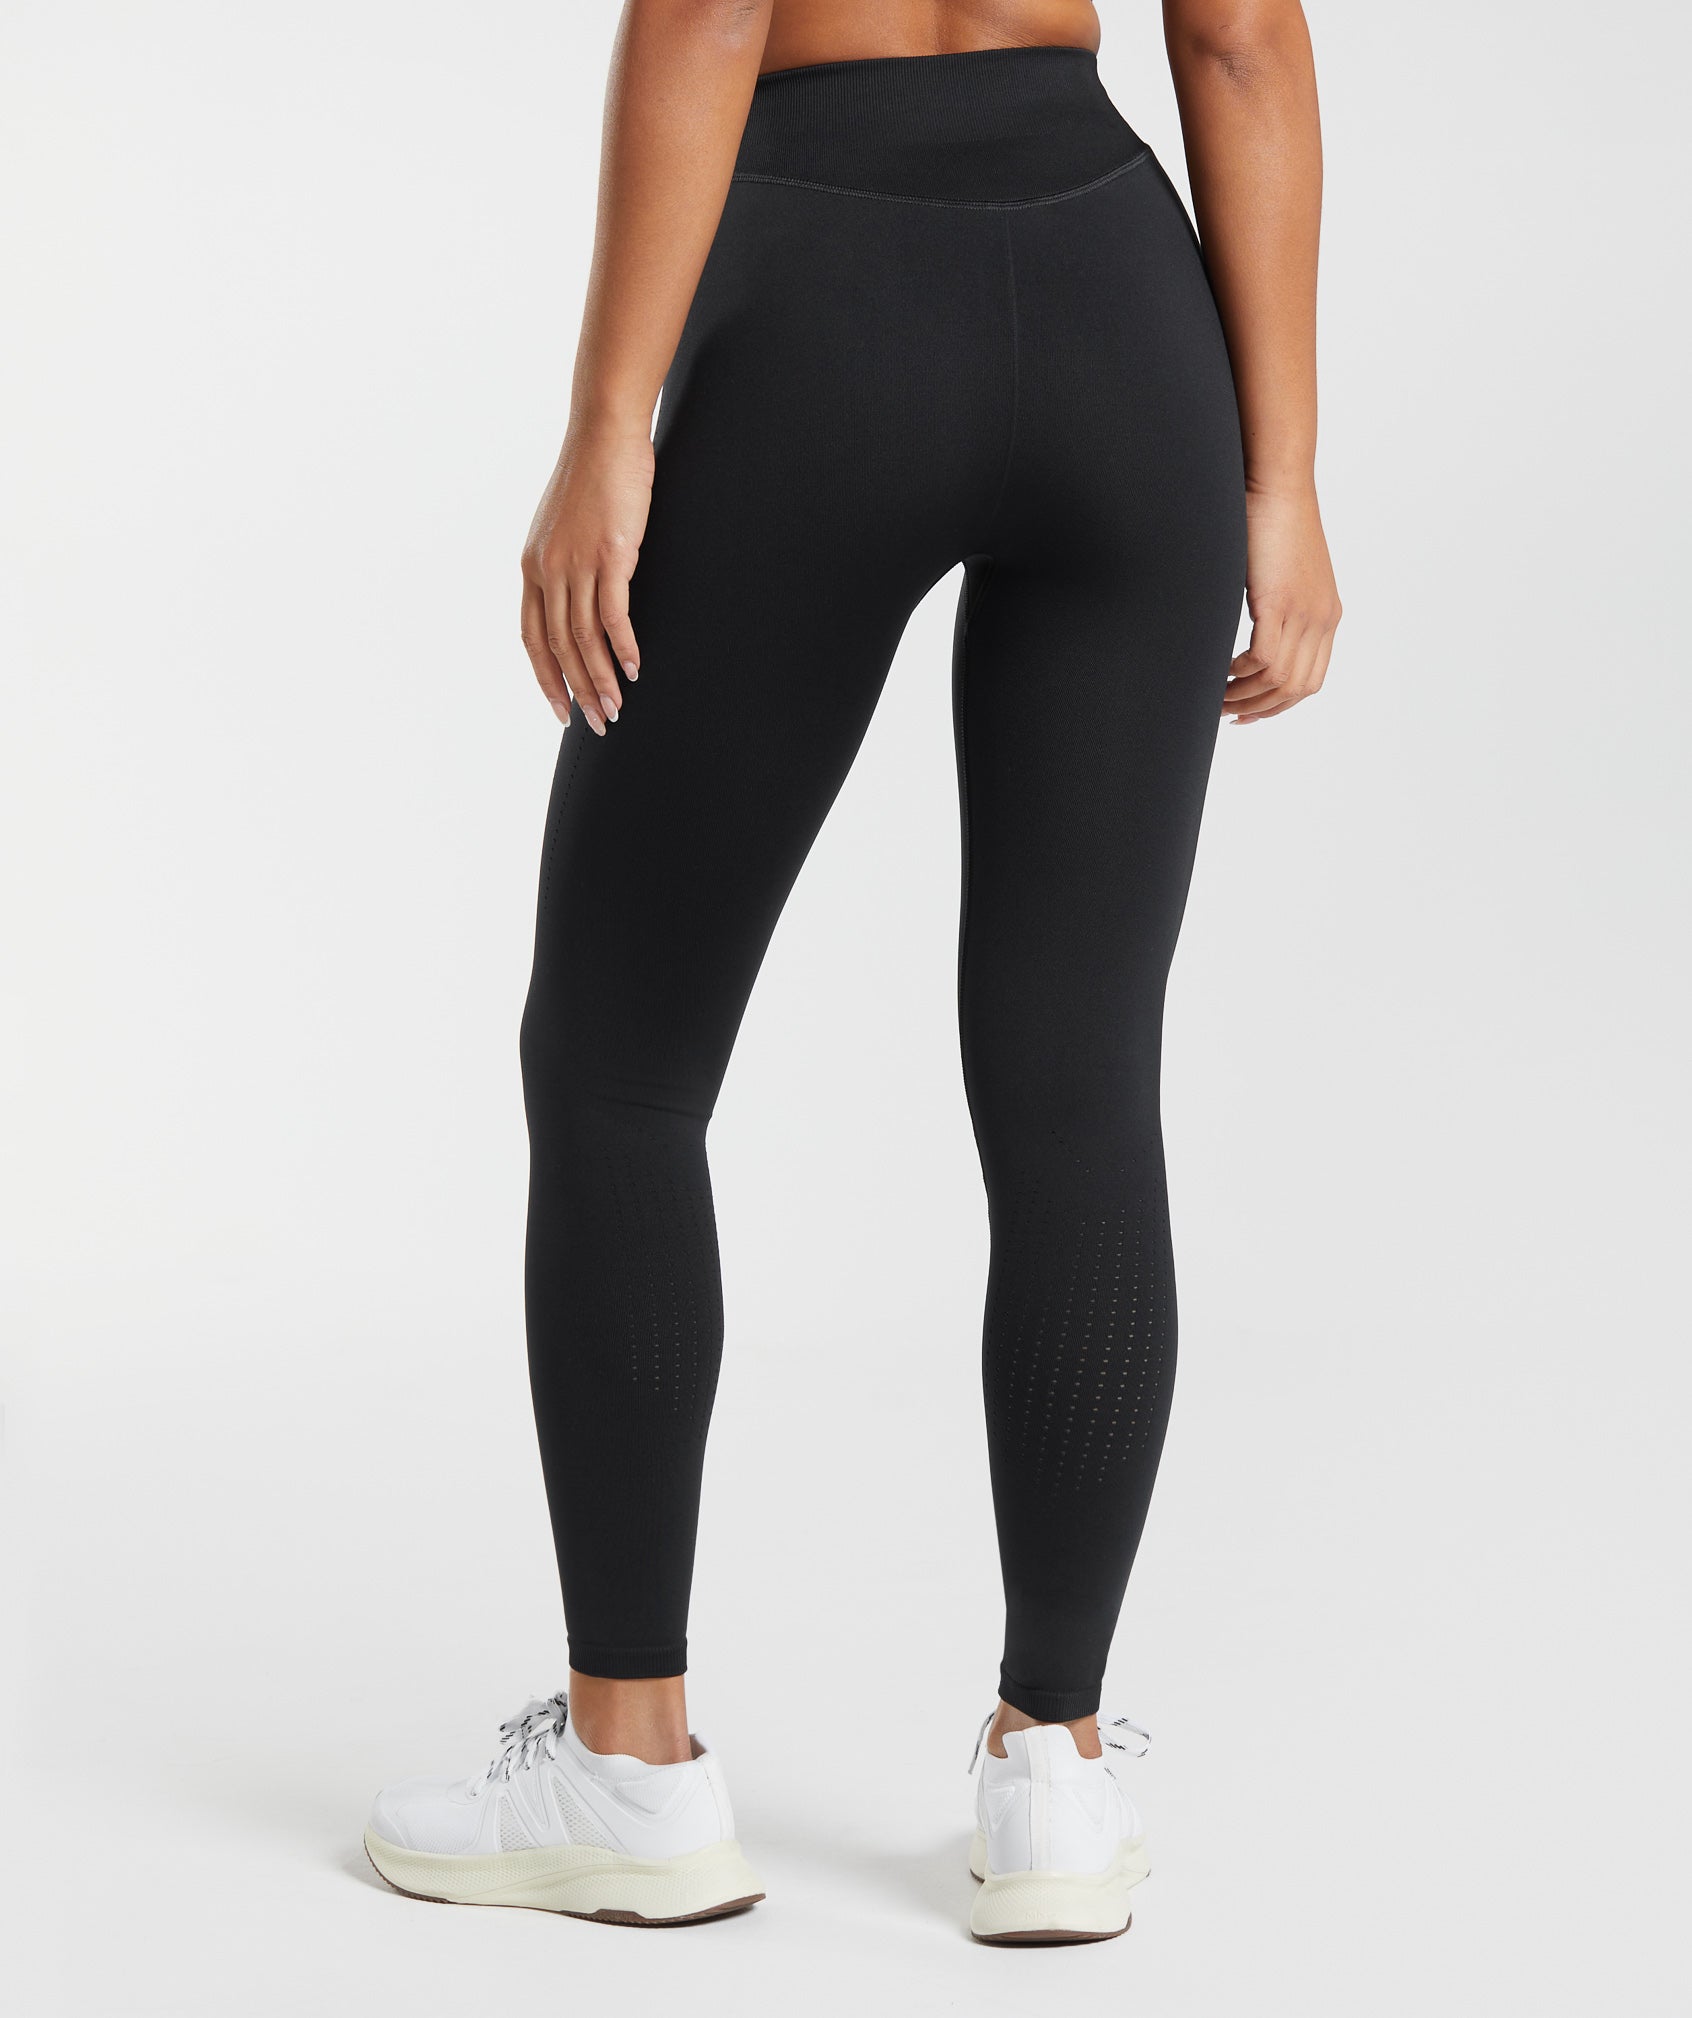 Gymshark Women's Sweat Seamless Leggings Black Brand New (Medium) $60  RETAIL